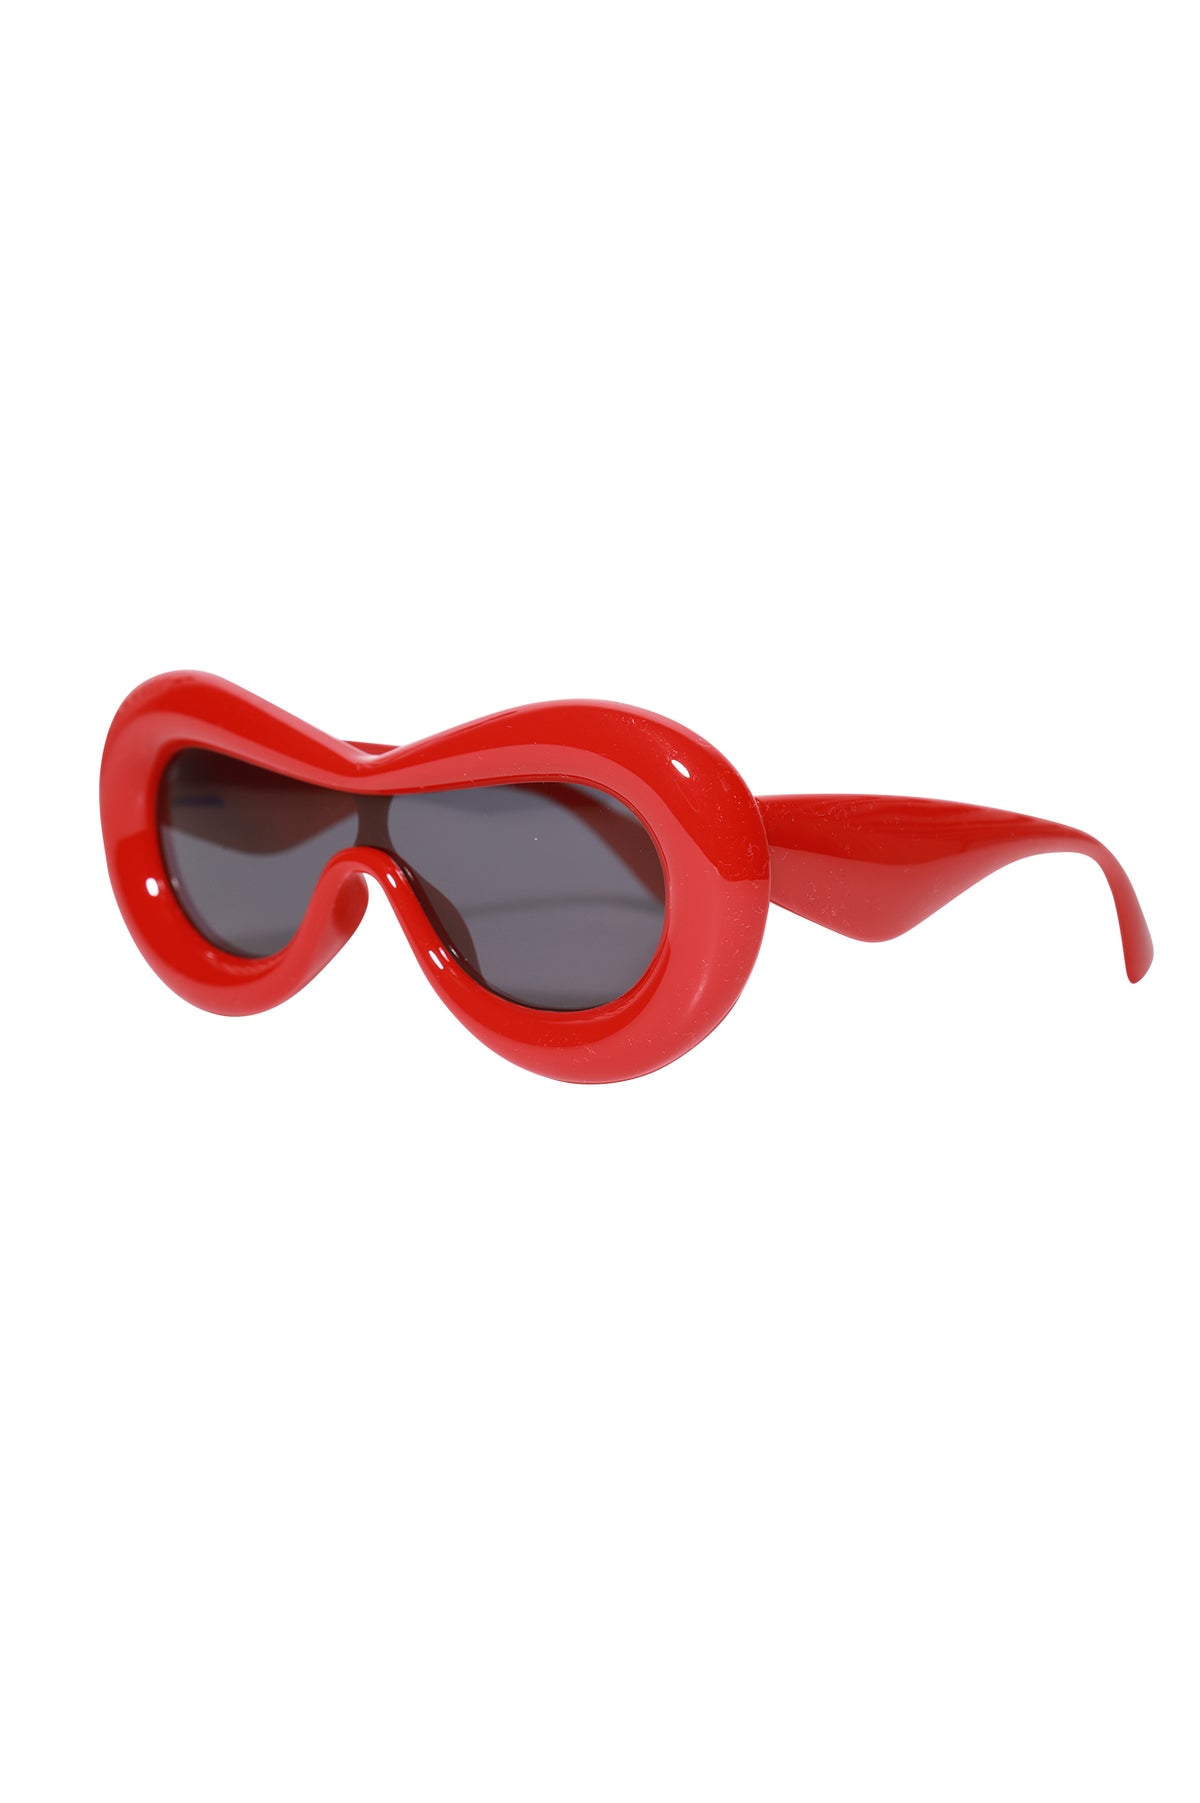 
              Look Alike Retro Framed Sunglasses - Red - Swank A Posh
            